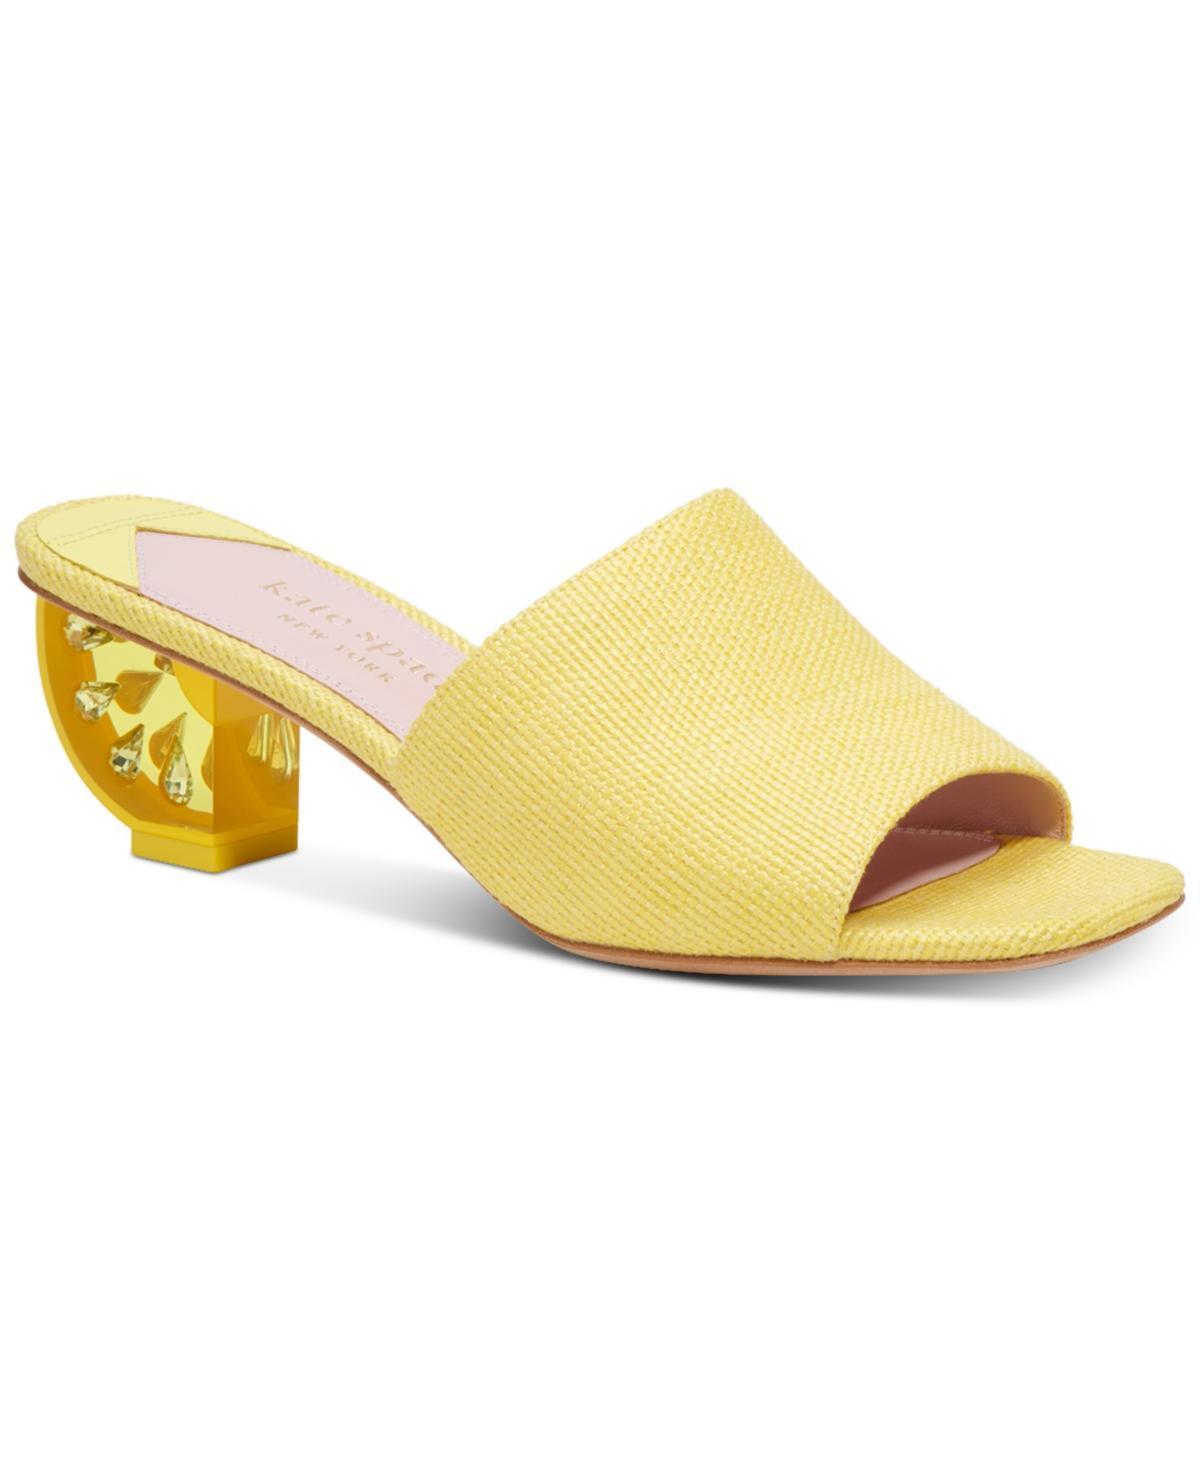 kate spade new york citrus sandal Product Image